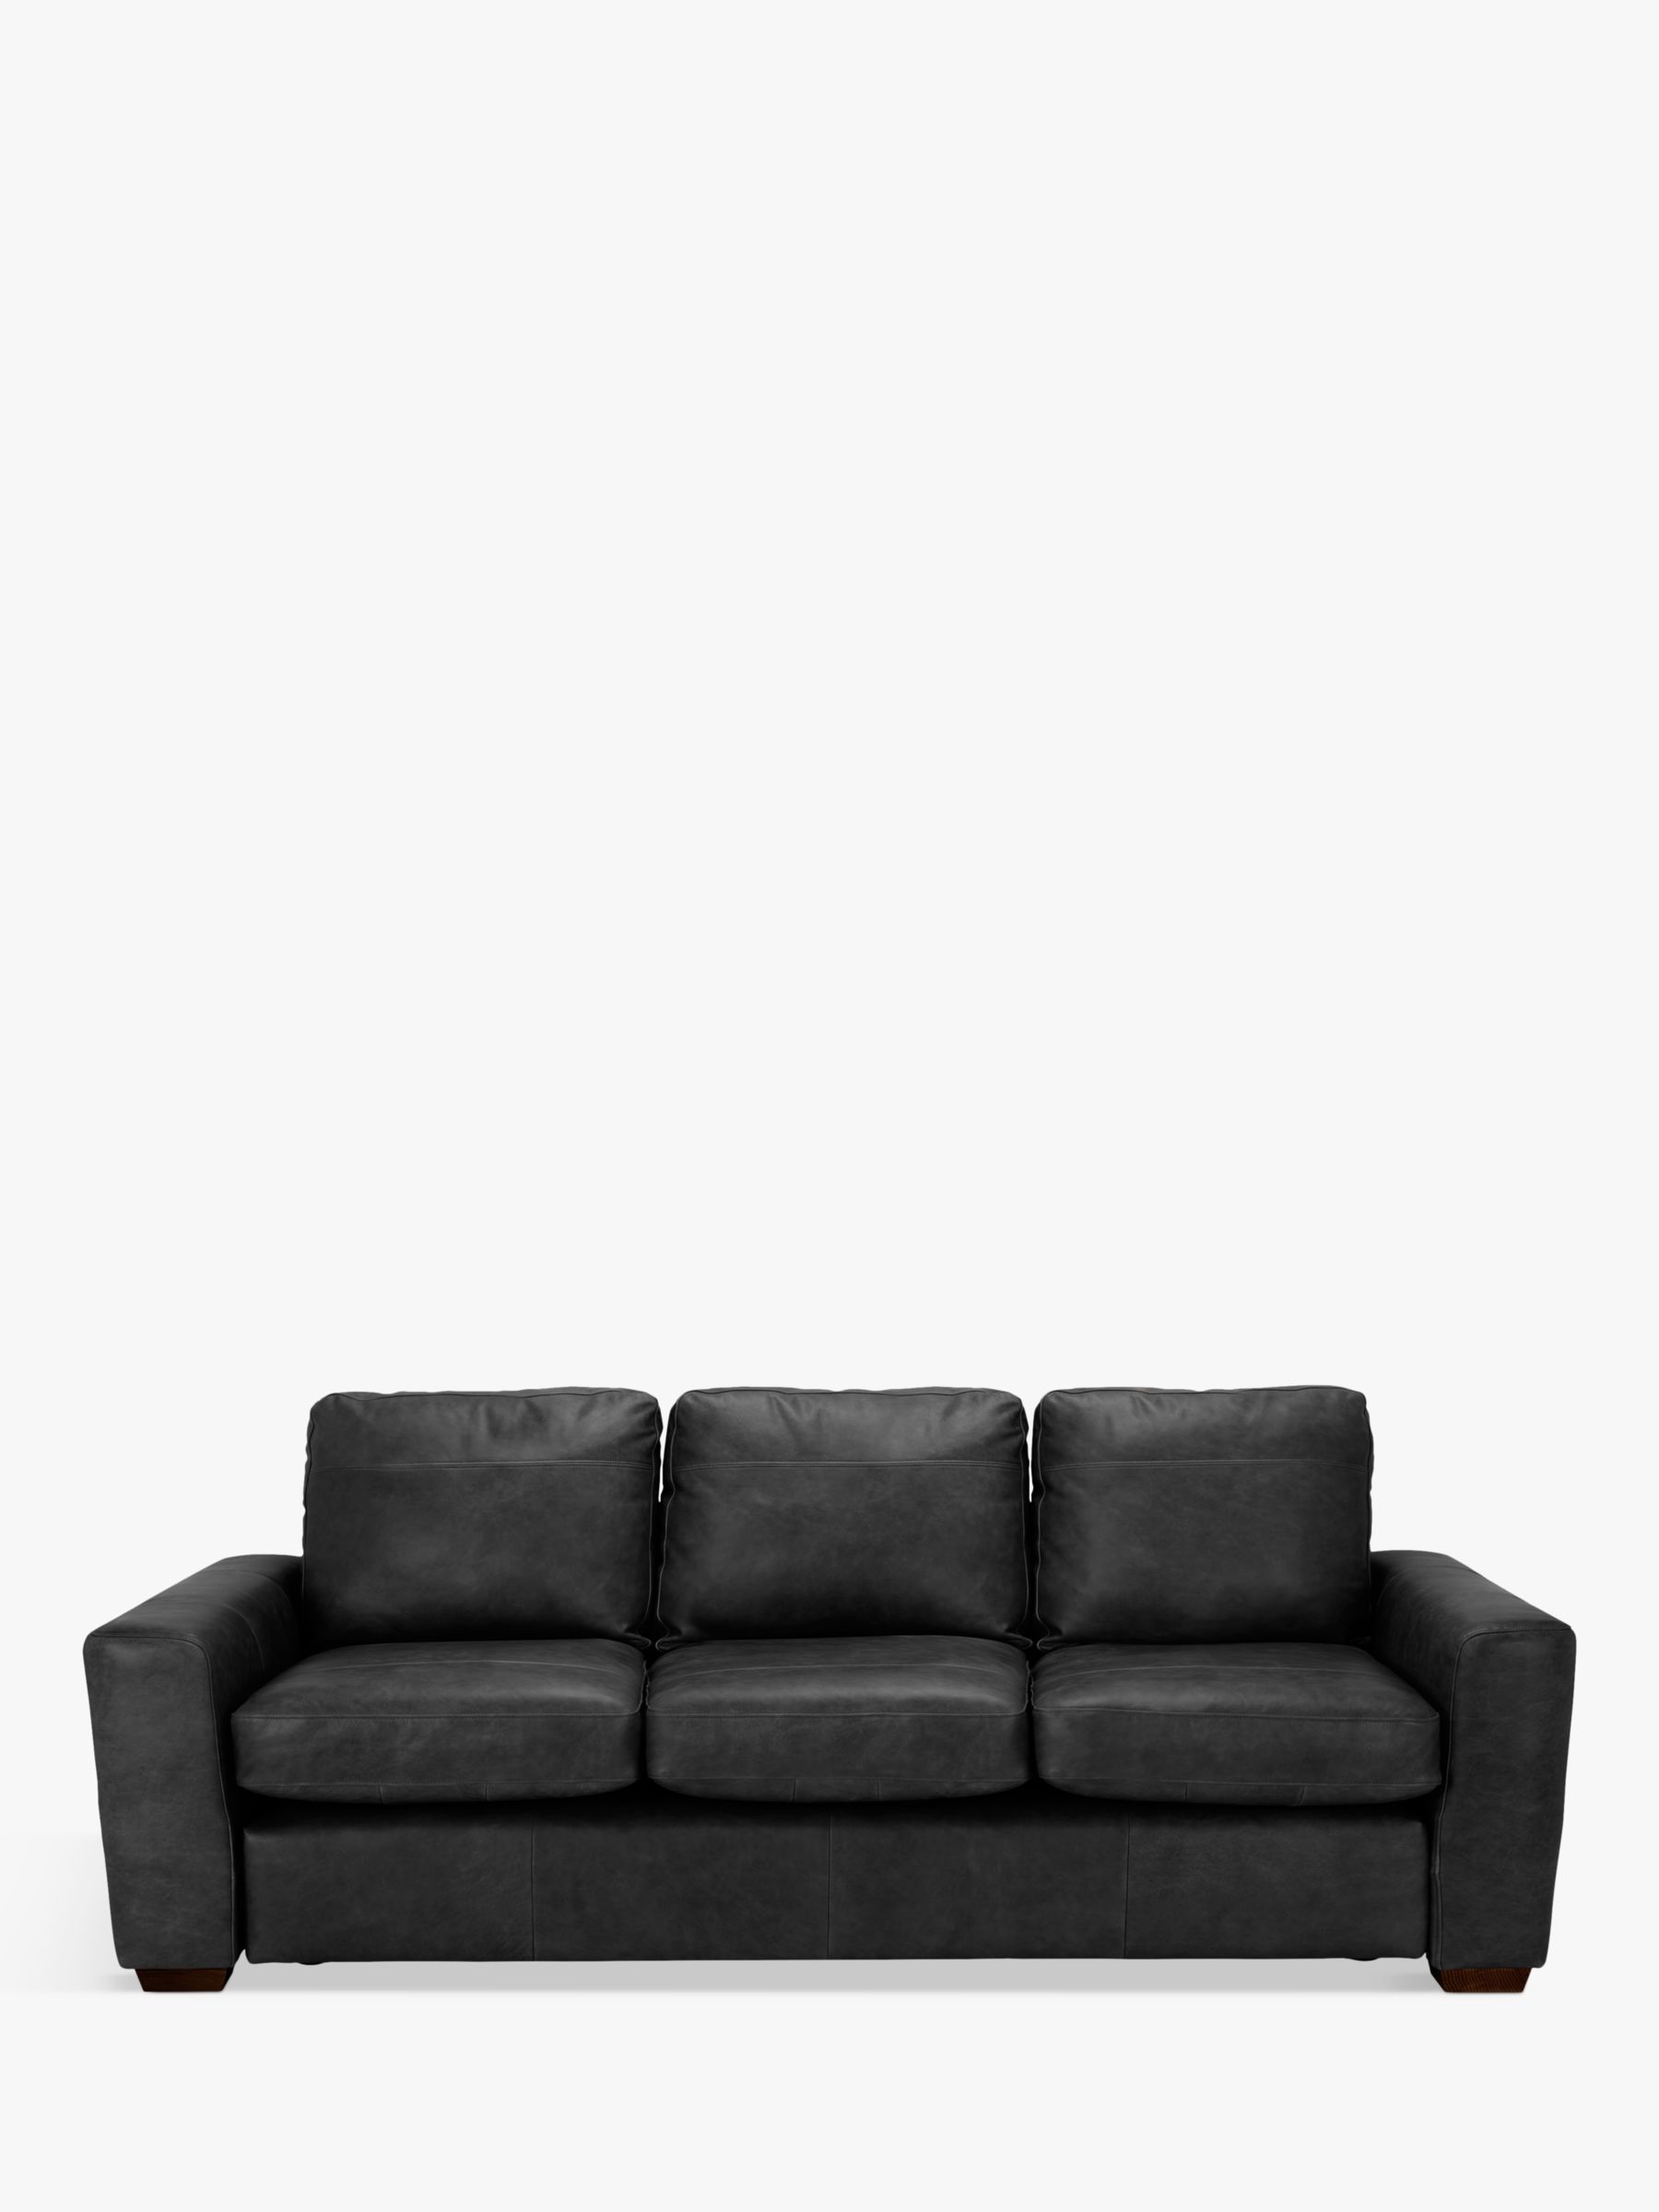 John Lewis Oliver Grand 4 Seater Leather Sofa, Dark Leg